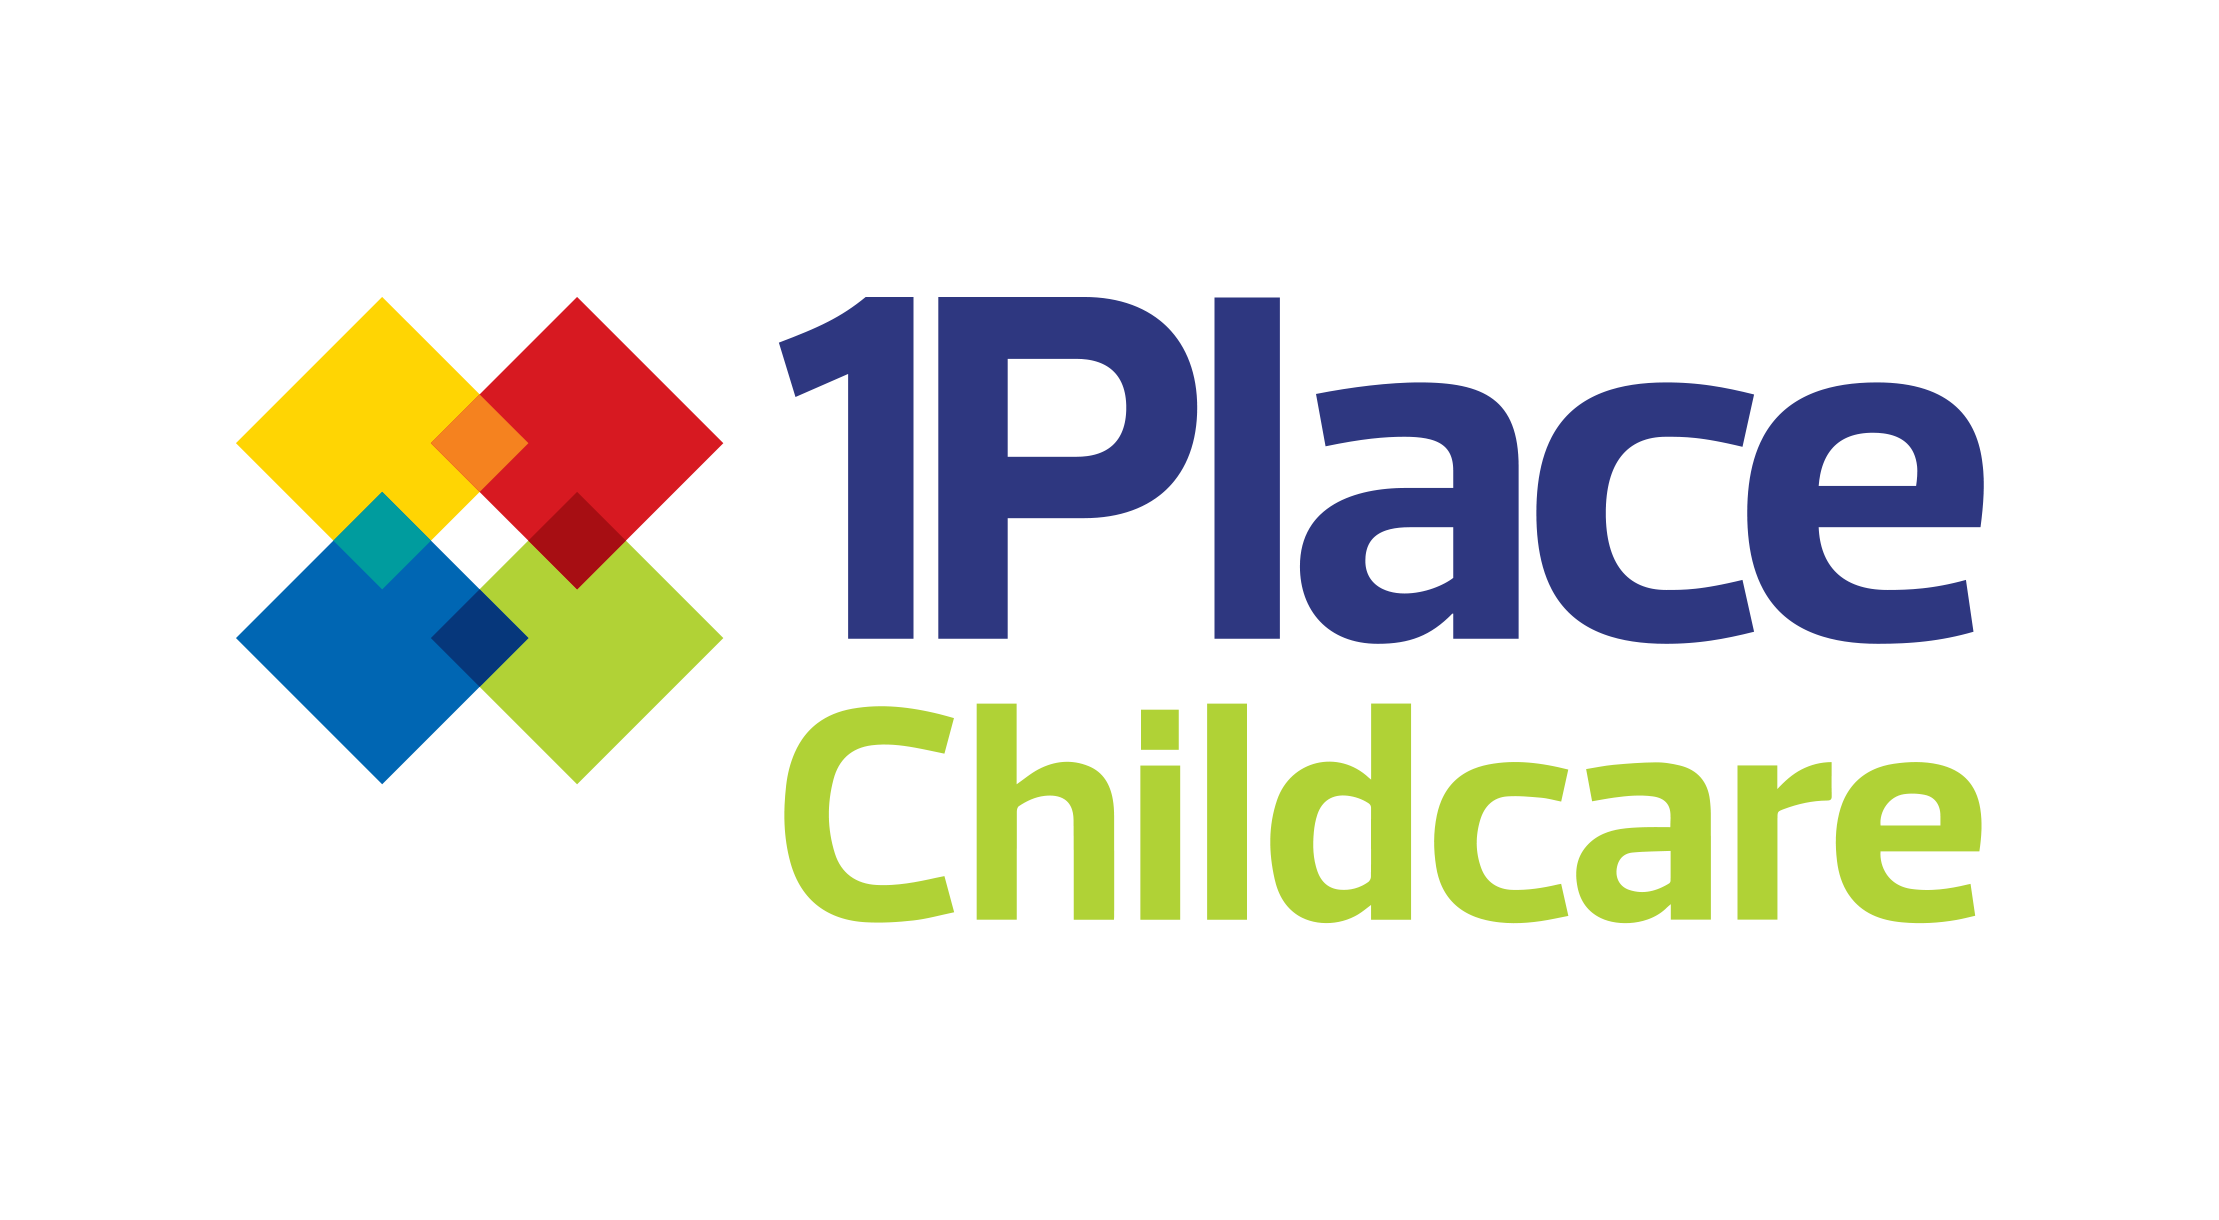 M233218 1Place Childcare logo no Tag LG FA